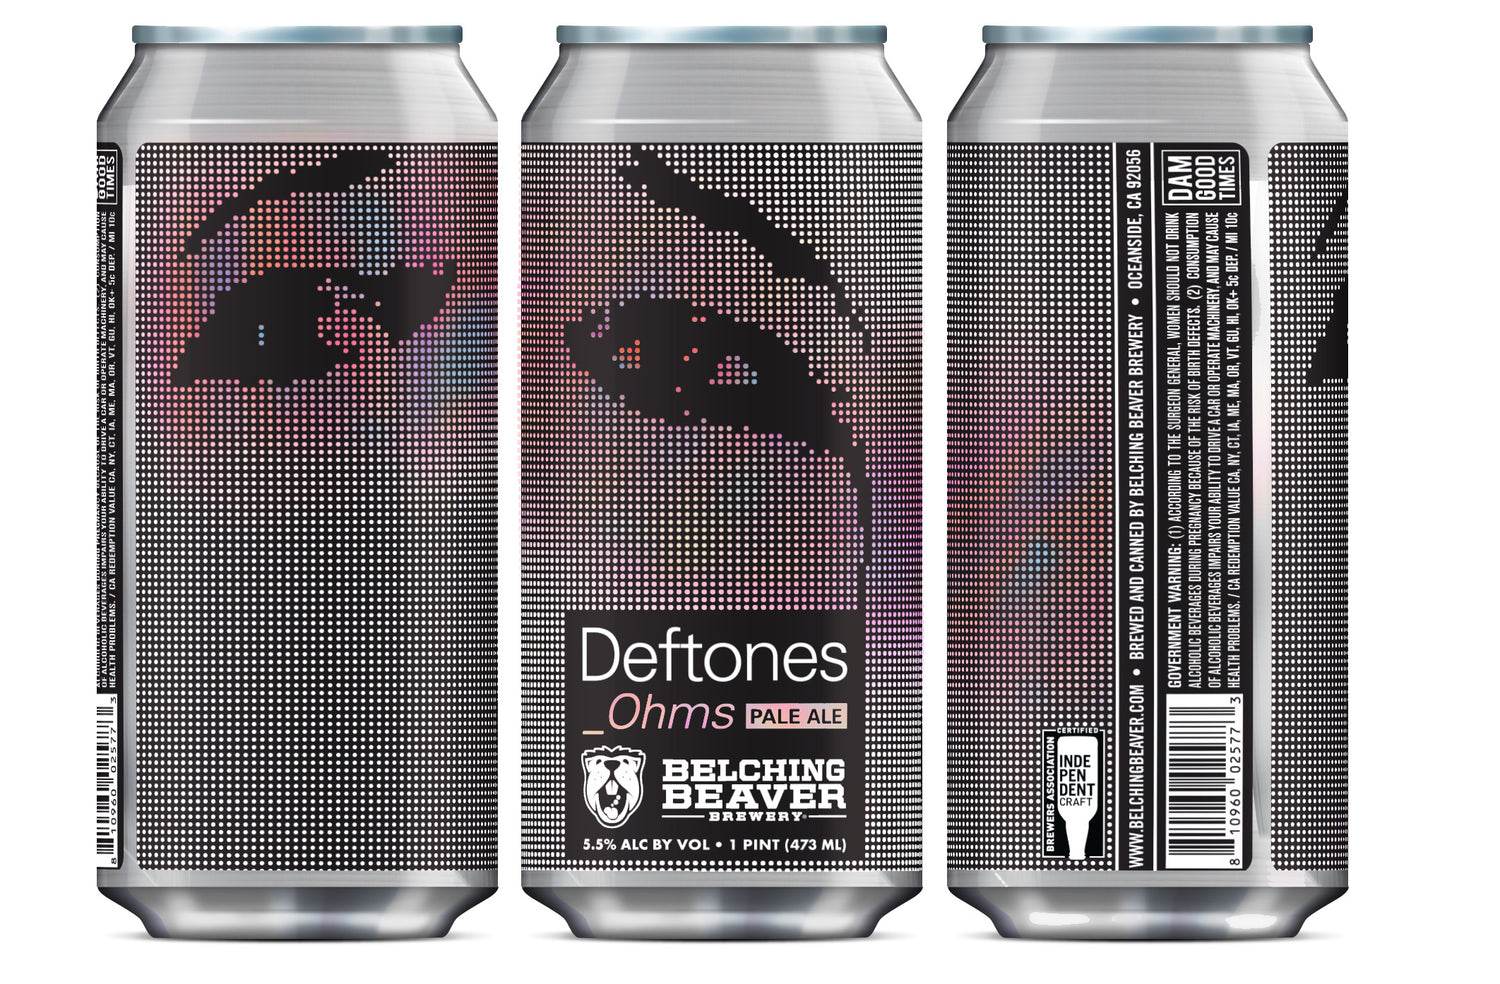 Deftones & Belching Beaver Brewery unveil collaborative 'Ohms' Pale Ale